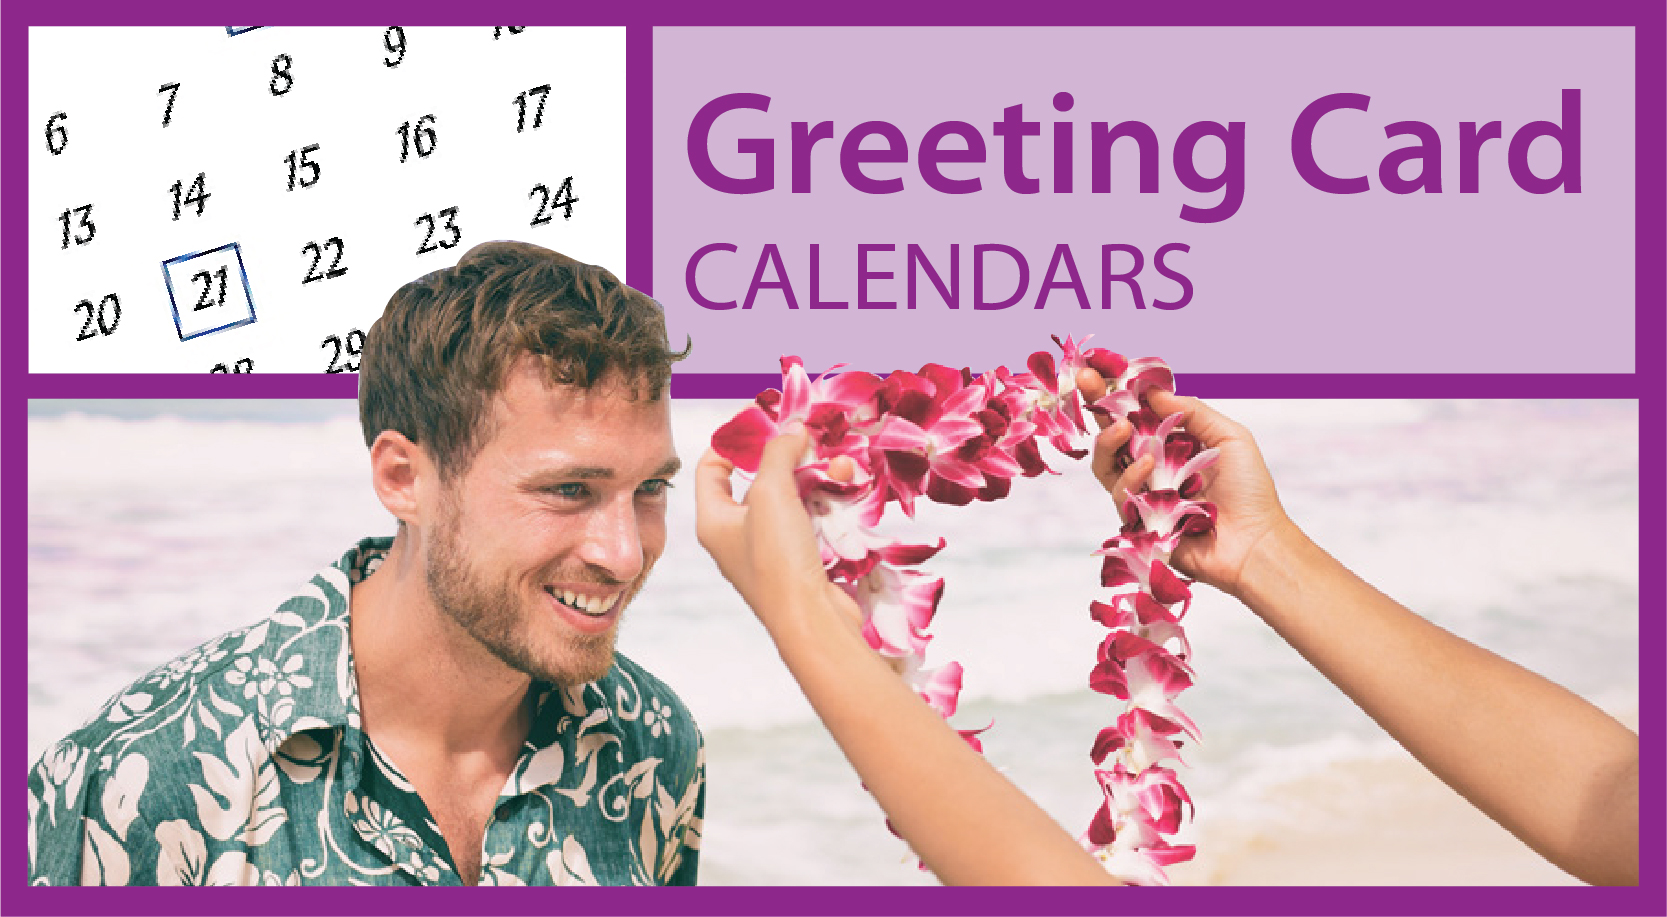 Greeting Card Calendars | Promotional Greeting Card Calendars | Custom Z-Fold Card Calendars